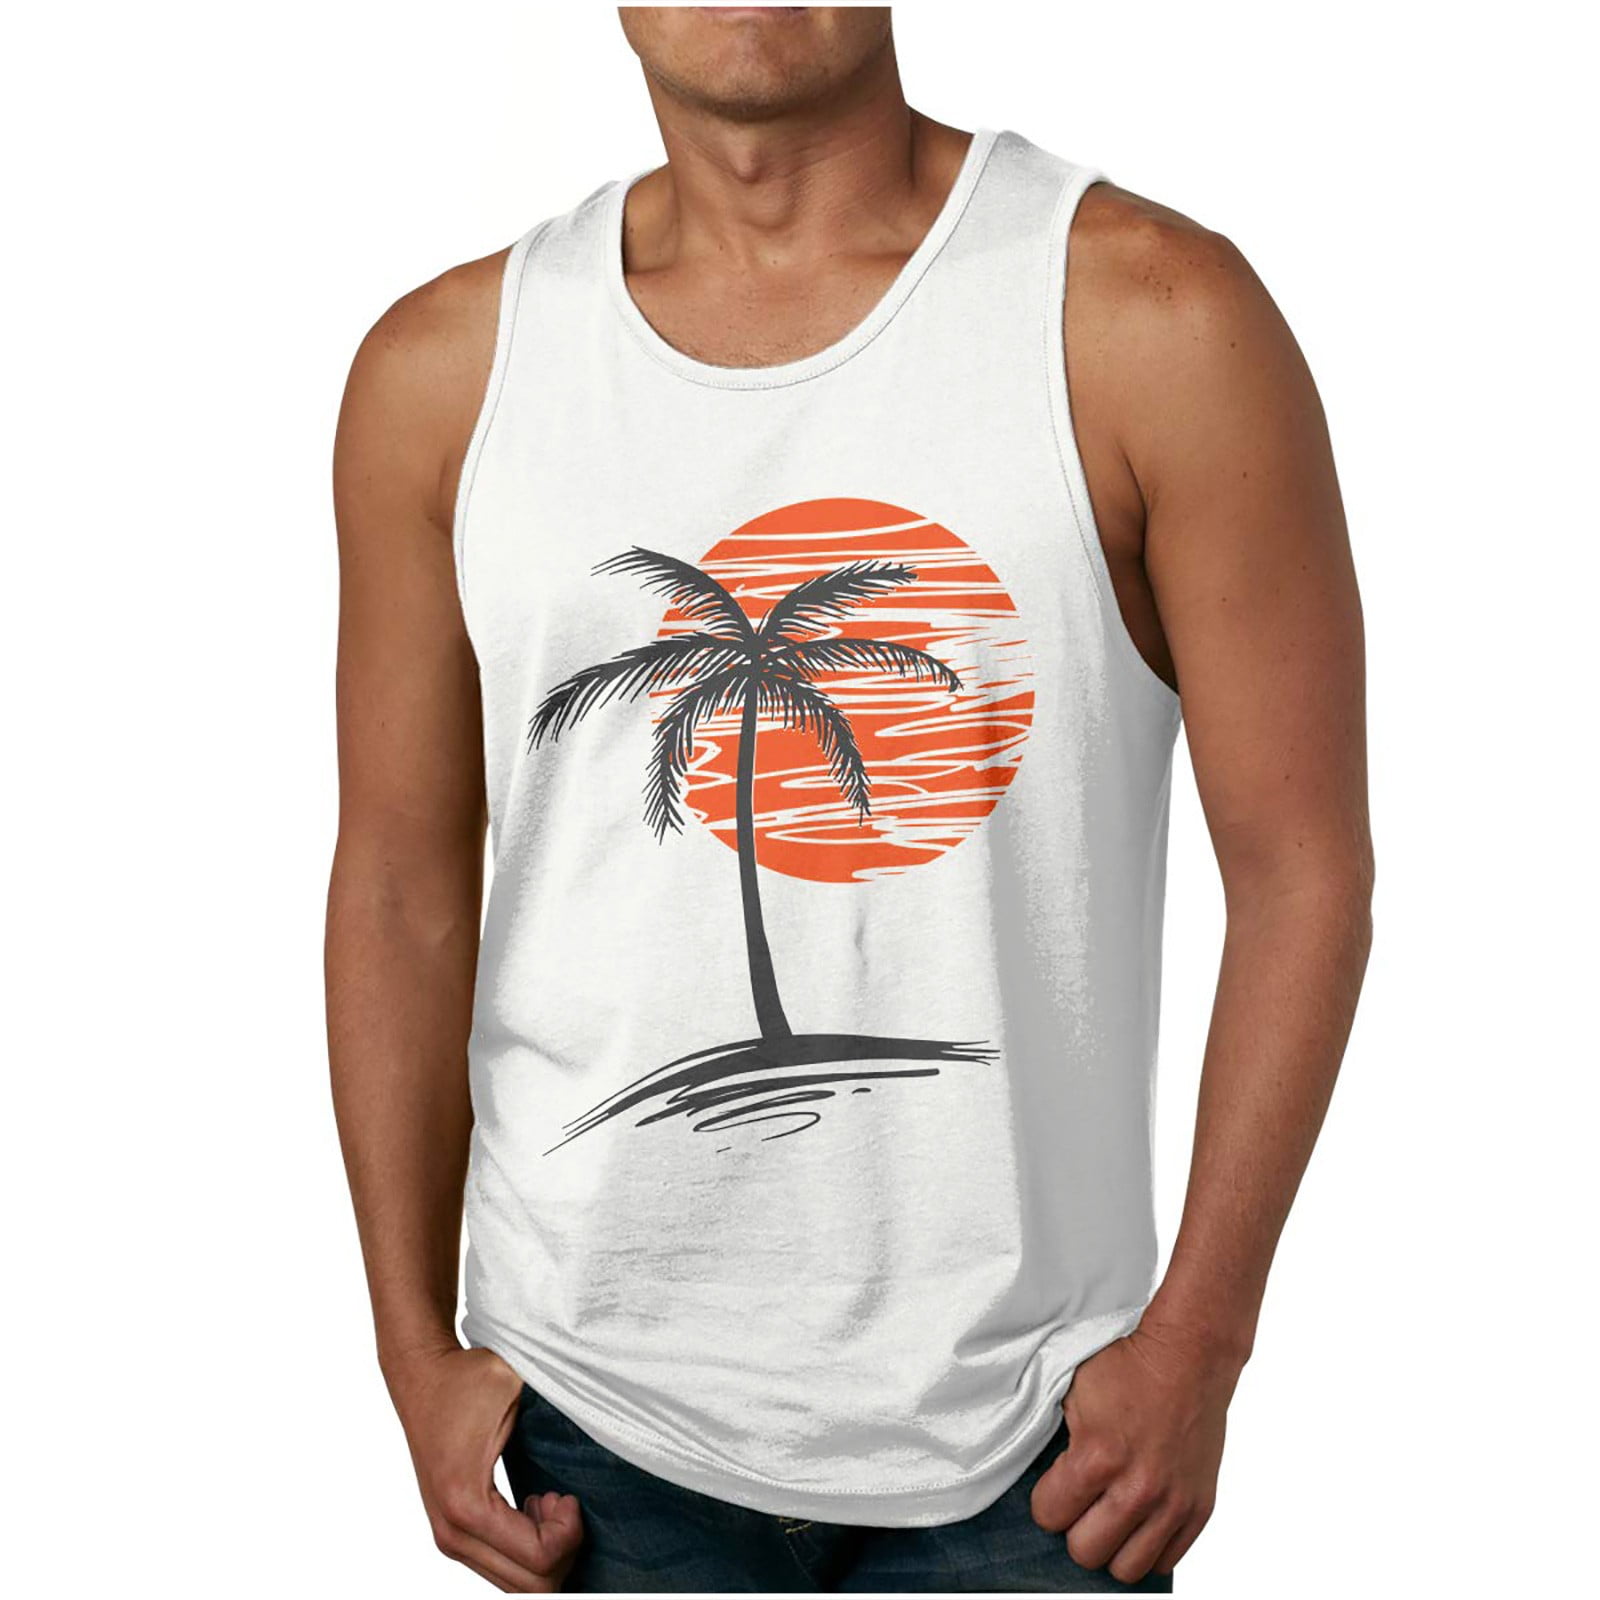 Mens Floral Beach Novelty Sleeveless Tees Hawaii Summer Vacation Tanks Shirts Workout Top Graphic T-Shirts - Walmart.com